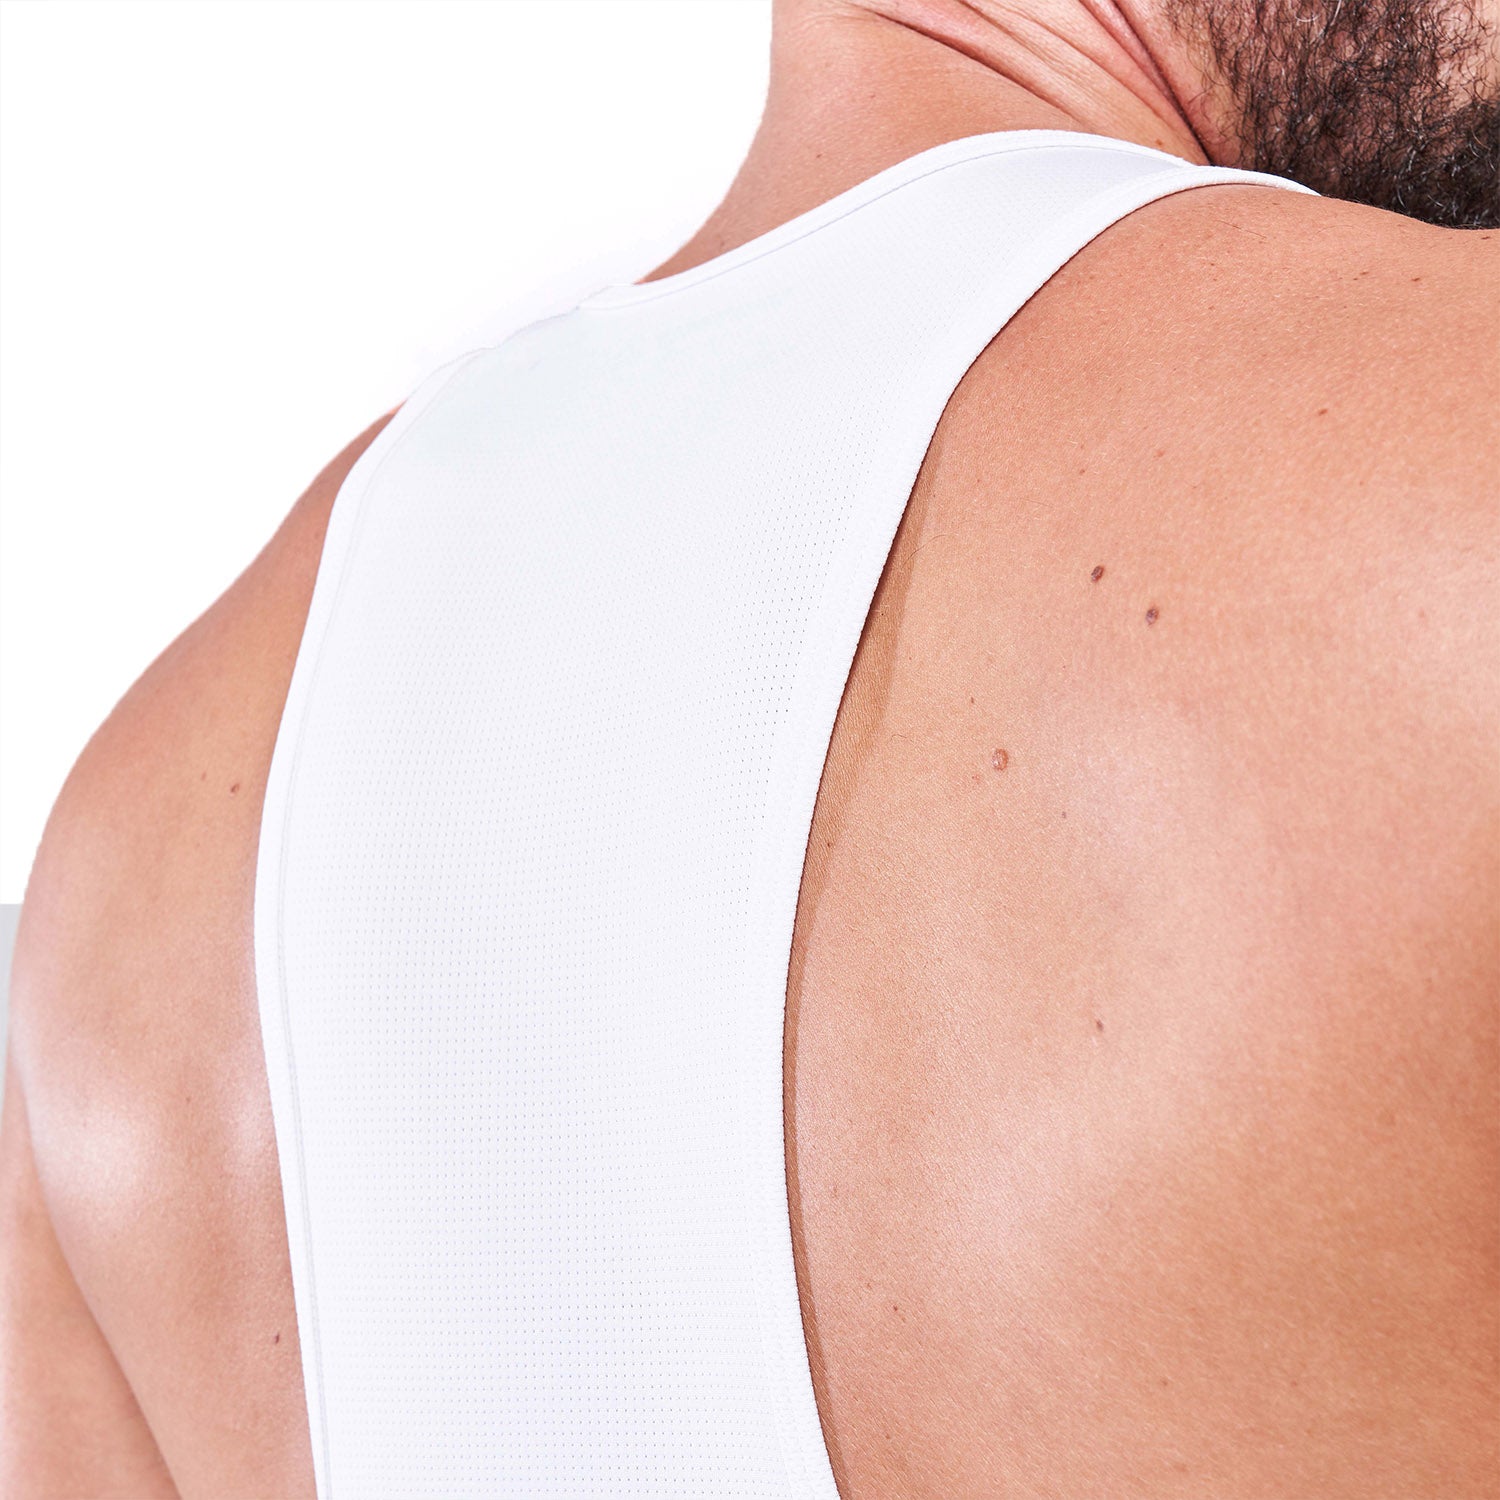 squatwolf-gym-wear-lab-360-weightless-stringer-white-stringer-vests-for-men